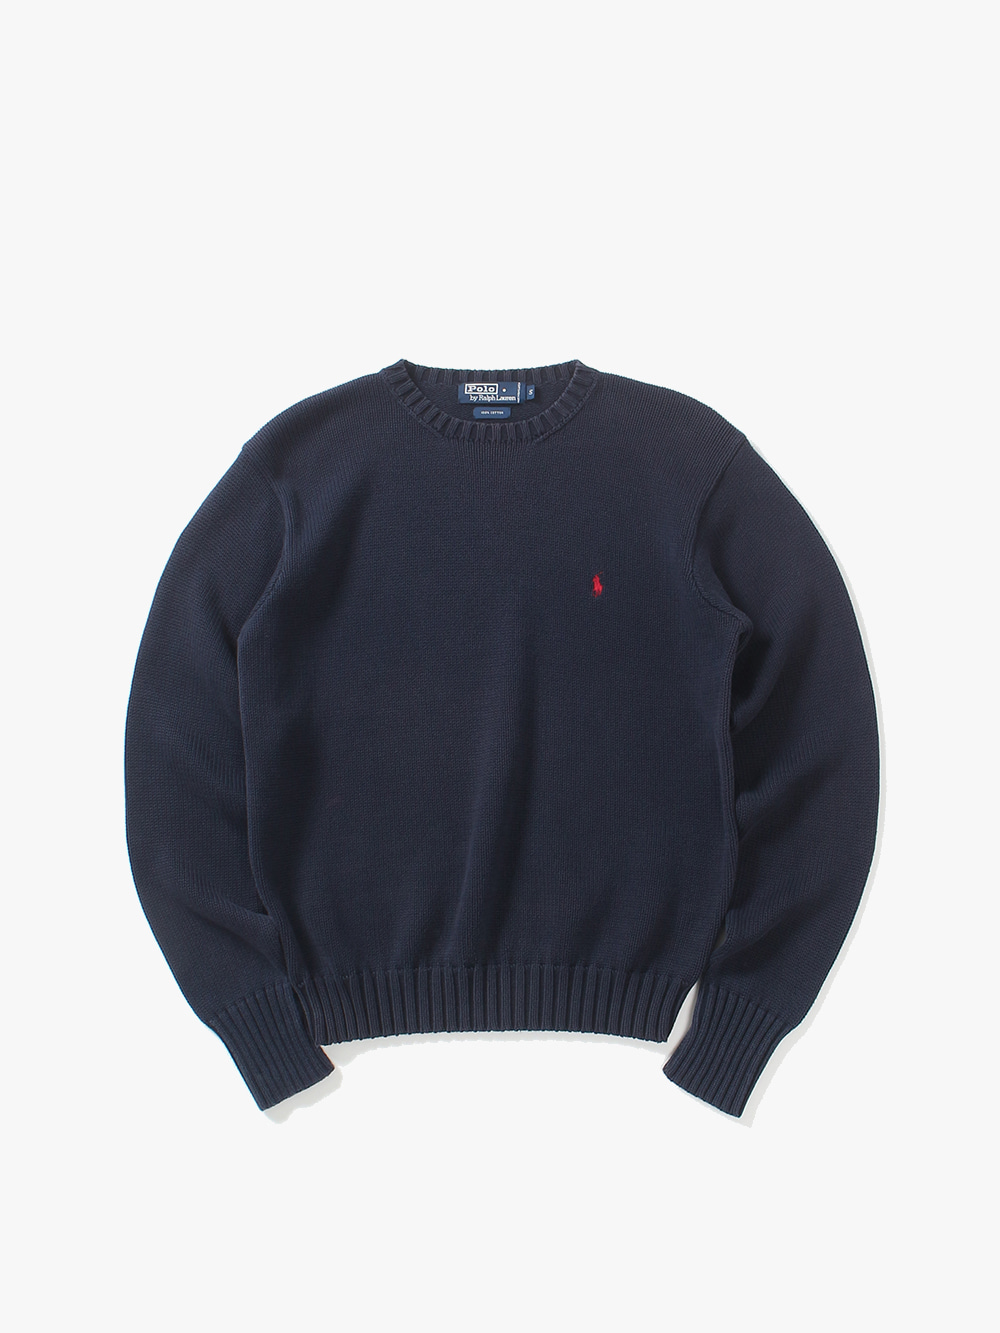 [ S ] Polo Ralph Lauren Sweater (6371)